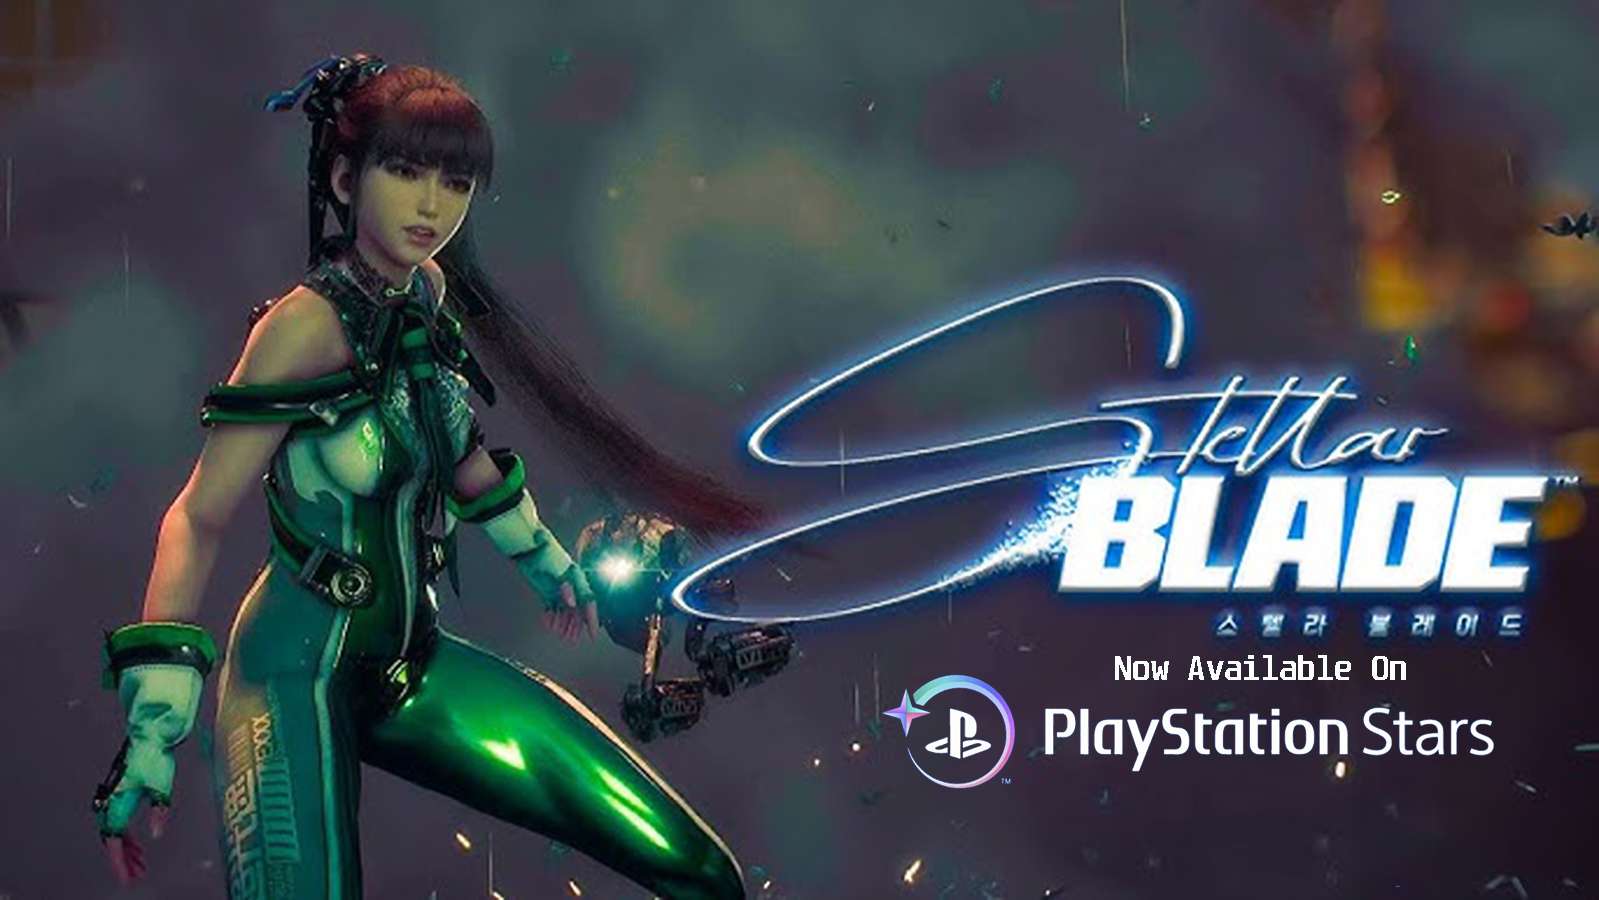 Stellar Blade добавлен в качестве награды для участников PlayStation Stars